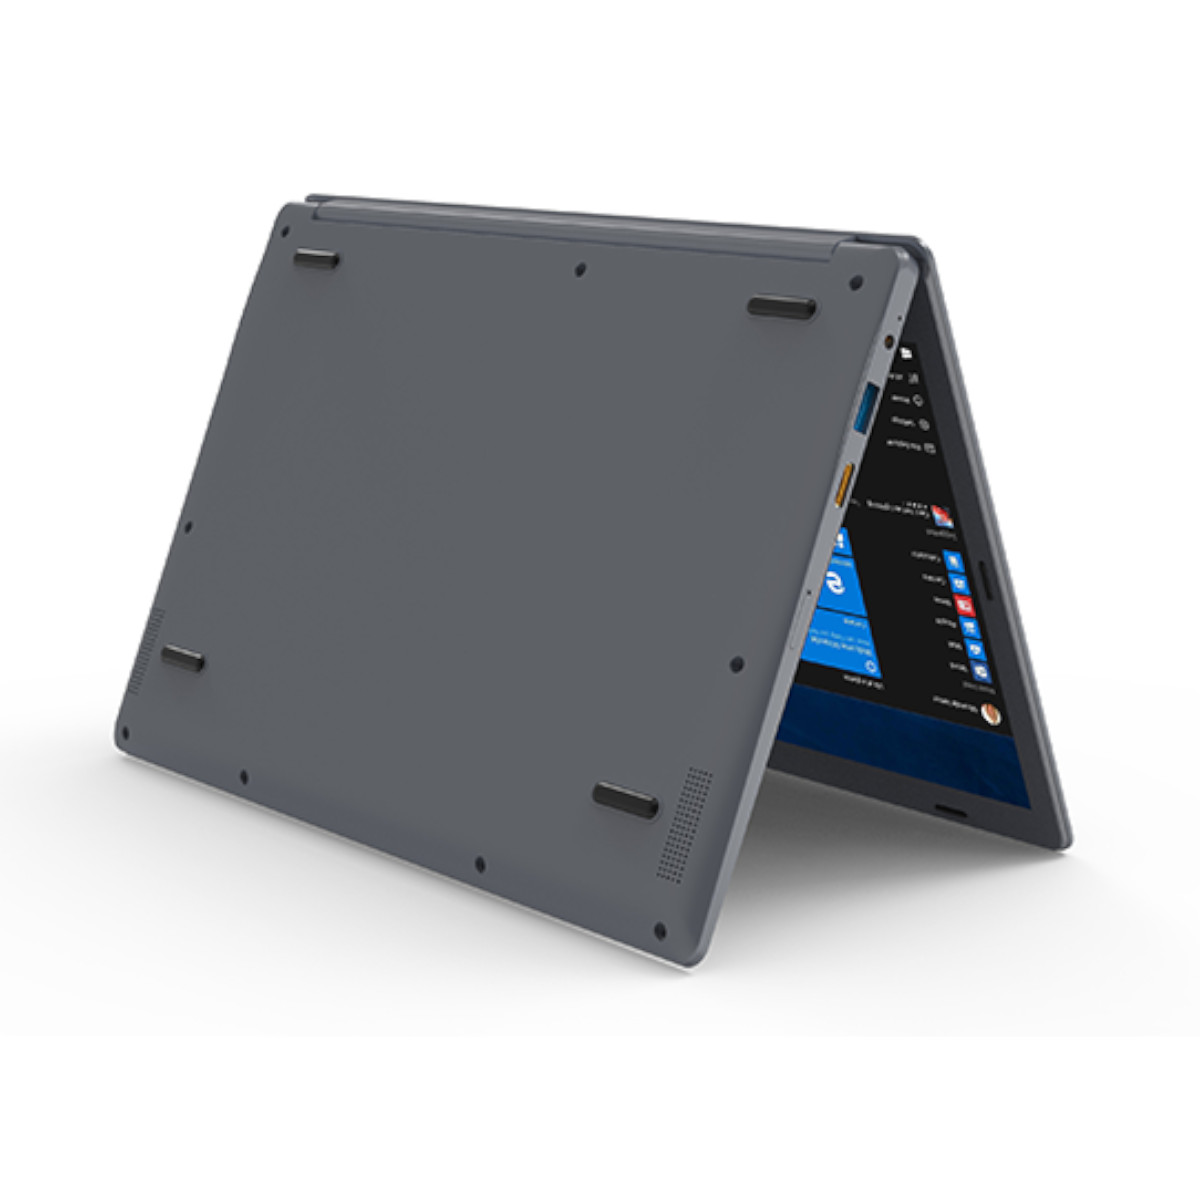 Laptop Evolve 3 Maestro Ebook 11.6 Pulgadas 4G LTE 64GB 4GB RAM